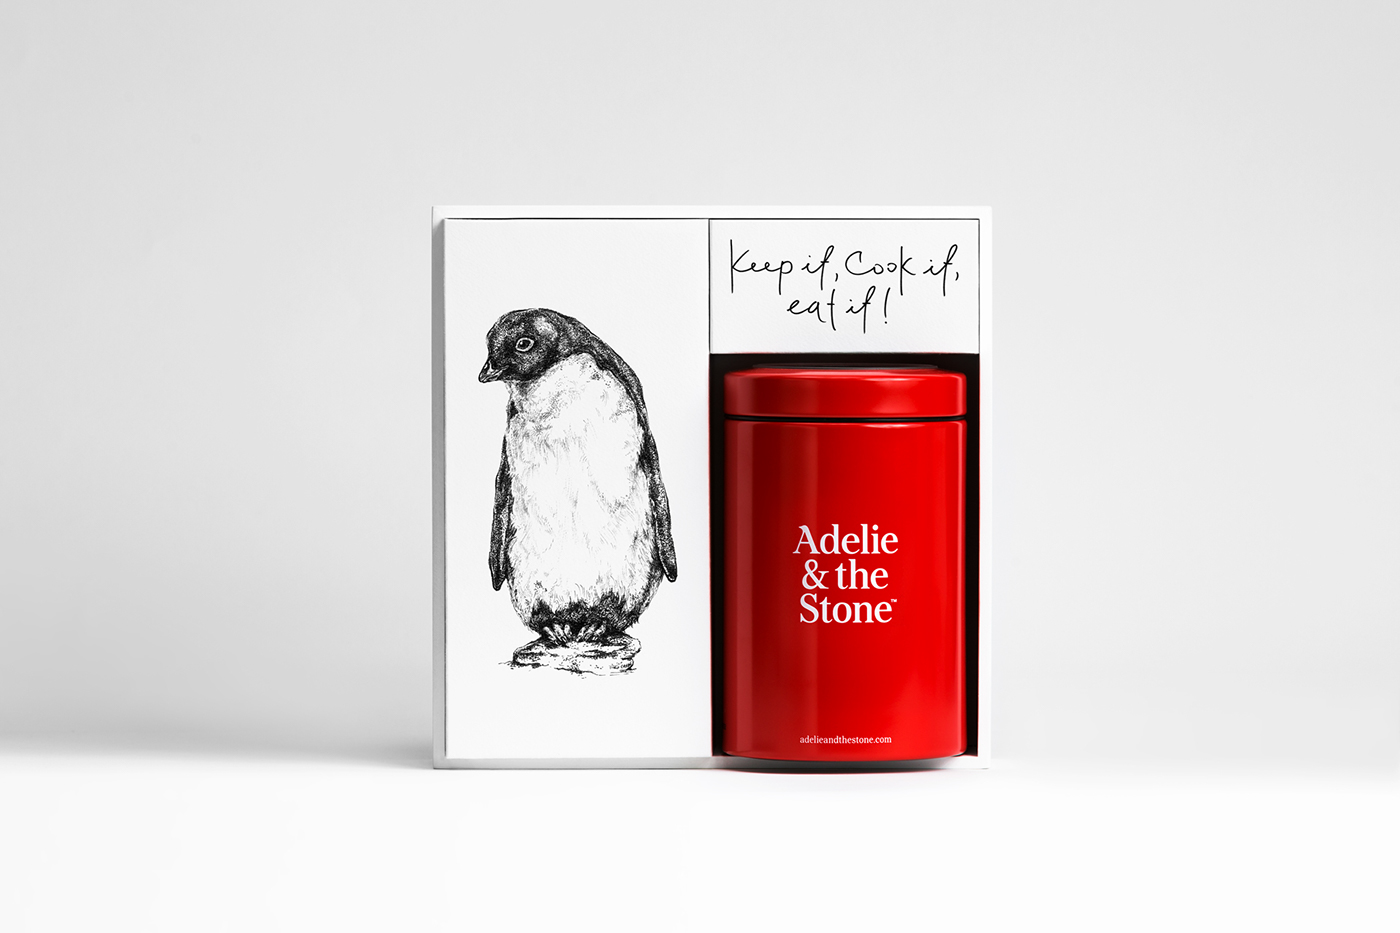 penguin Adélie design gift antarctica flower shop graphicdesign stone present